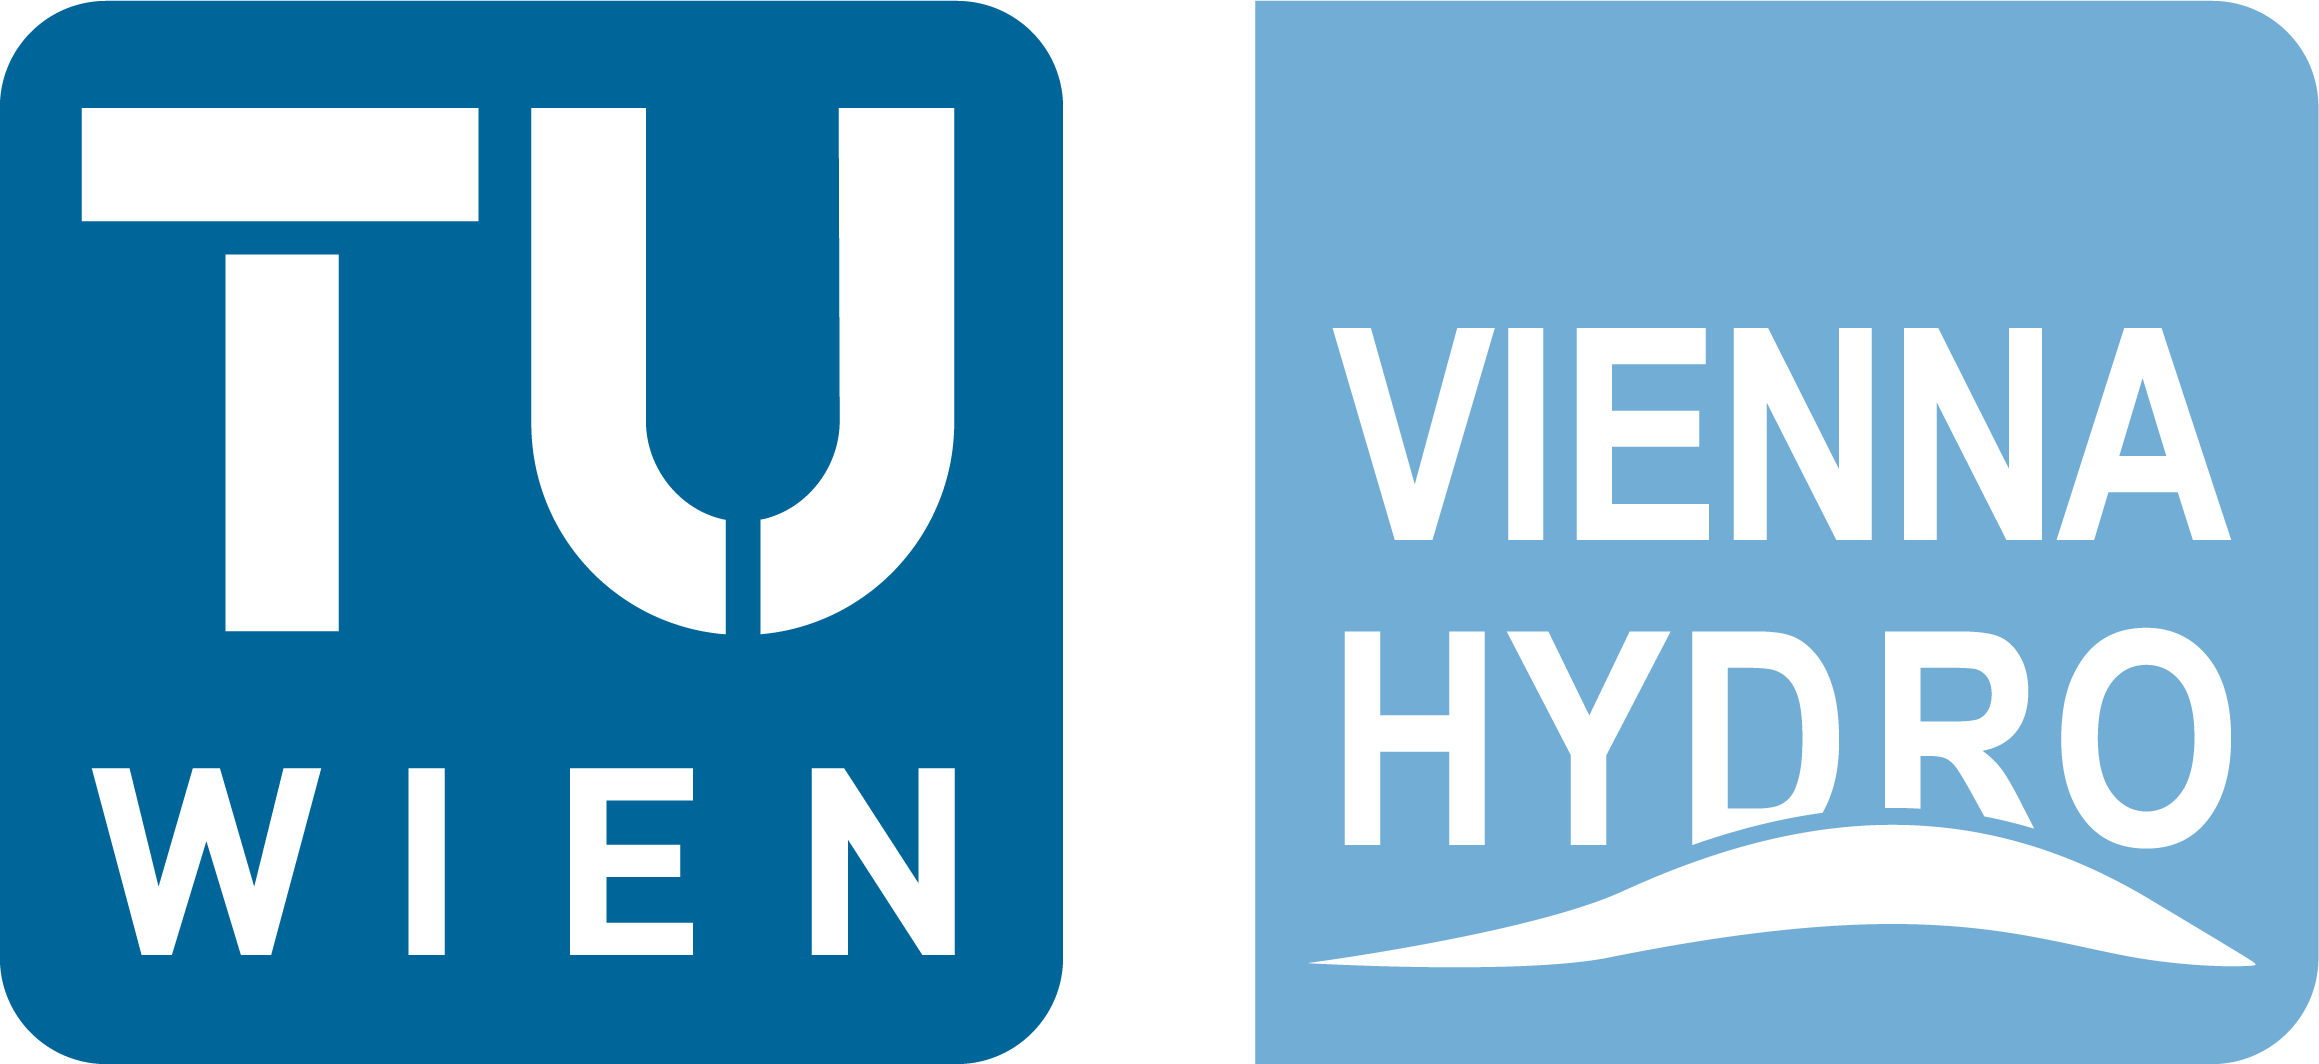 Logo Viennahydro - blue lettering